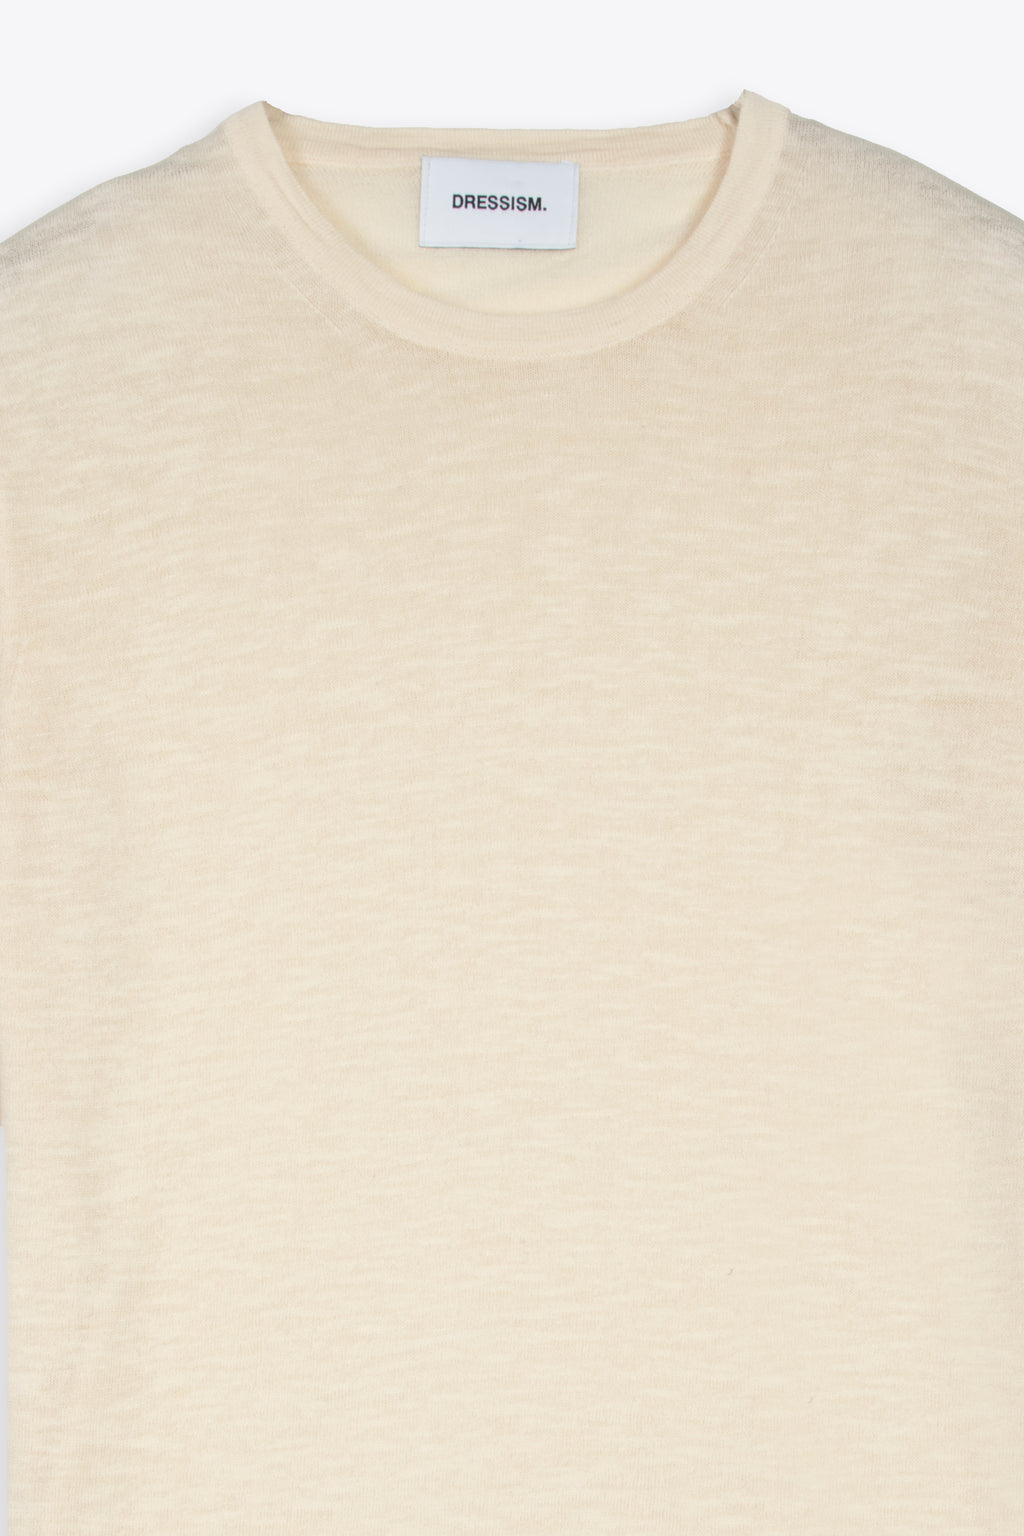 alt-image__Off-white-linen-blend-t-shirt